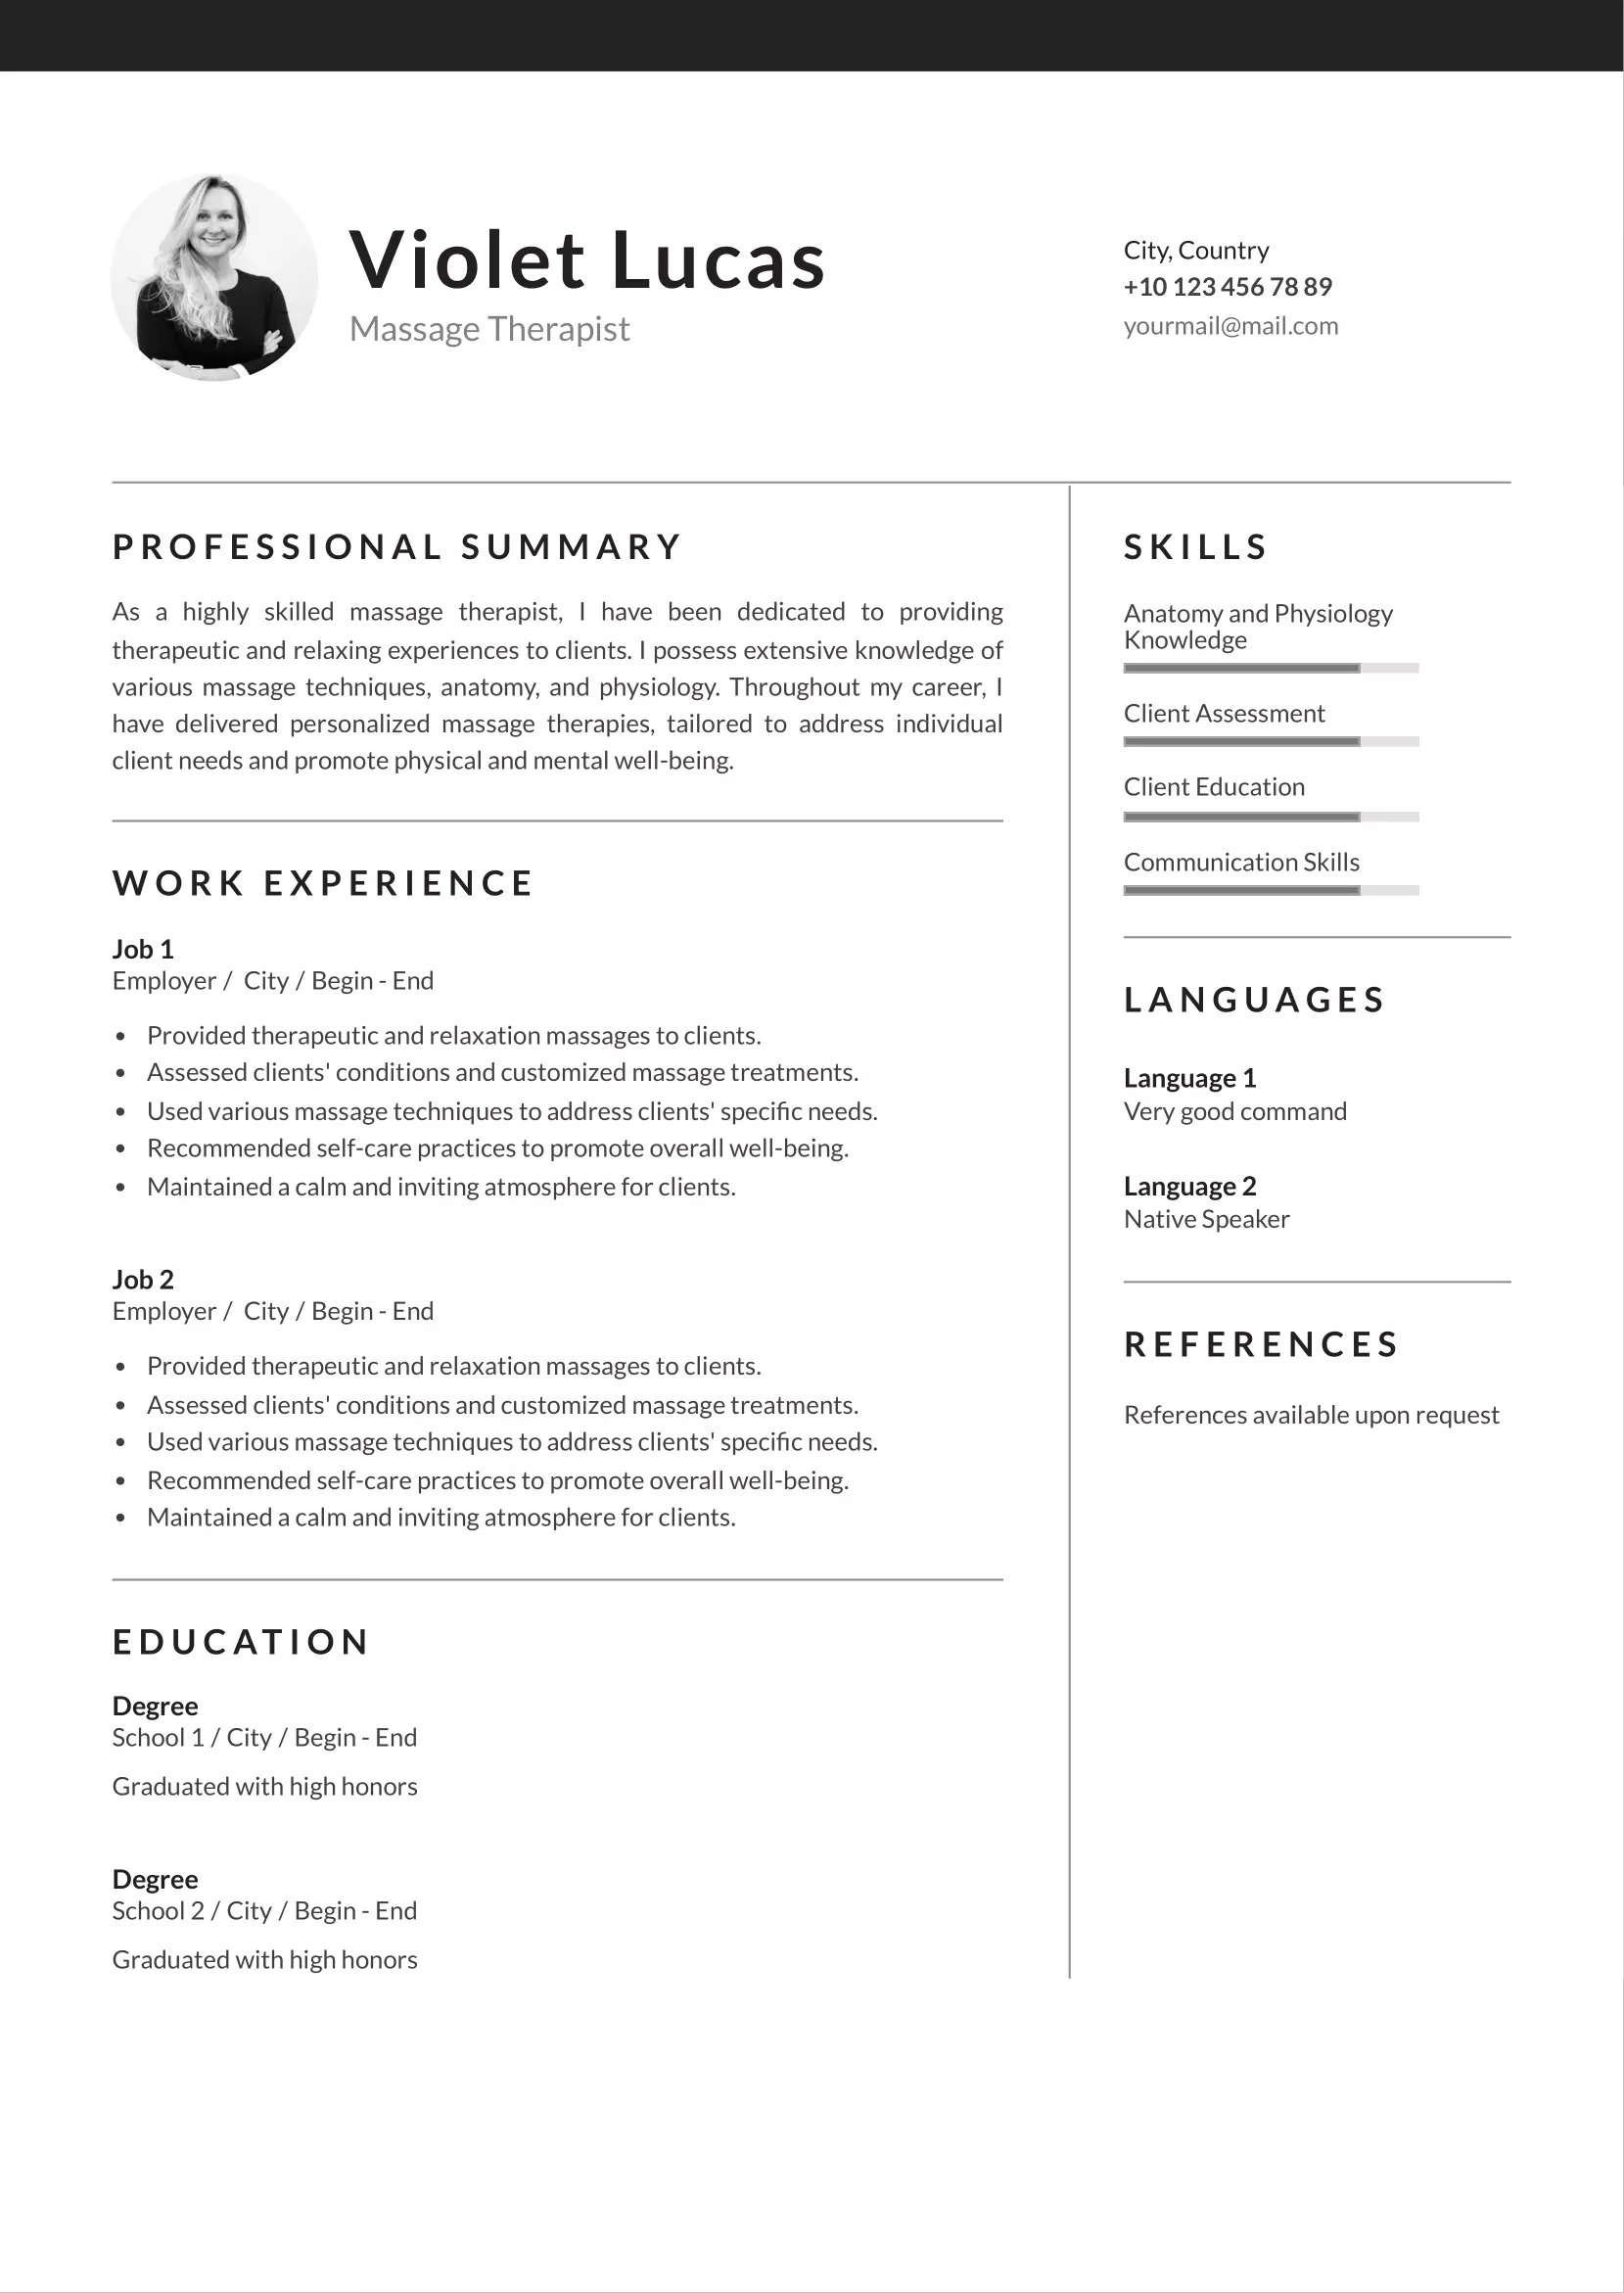 Massage therapist resume CV